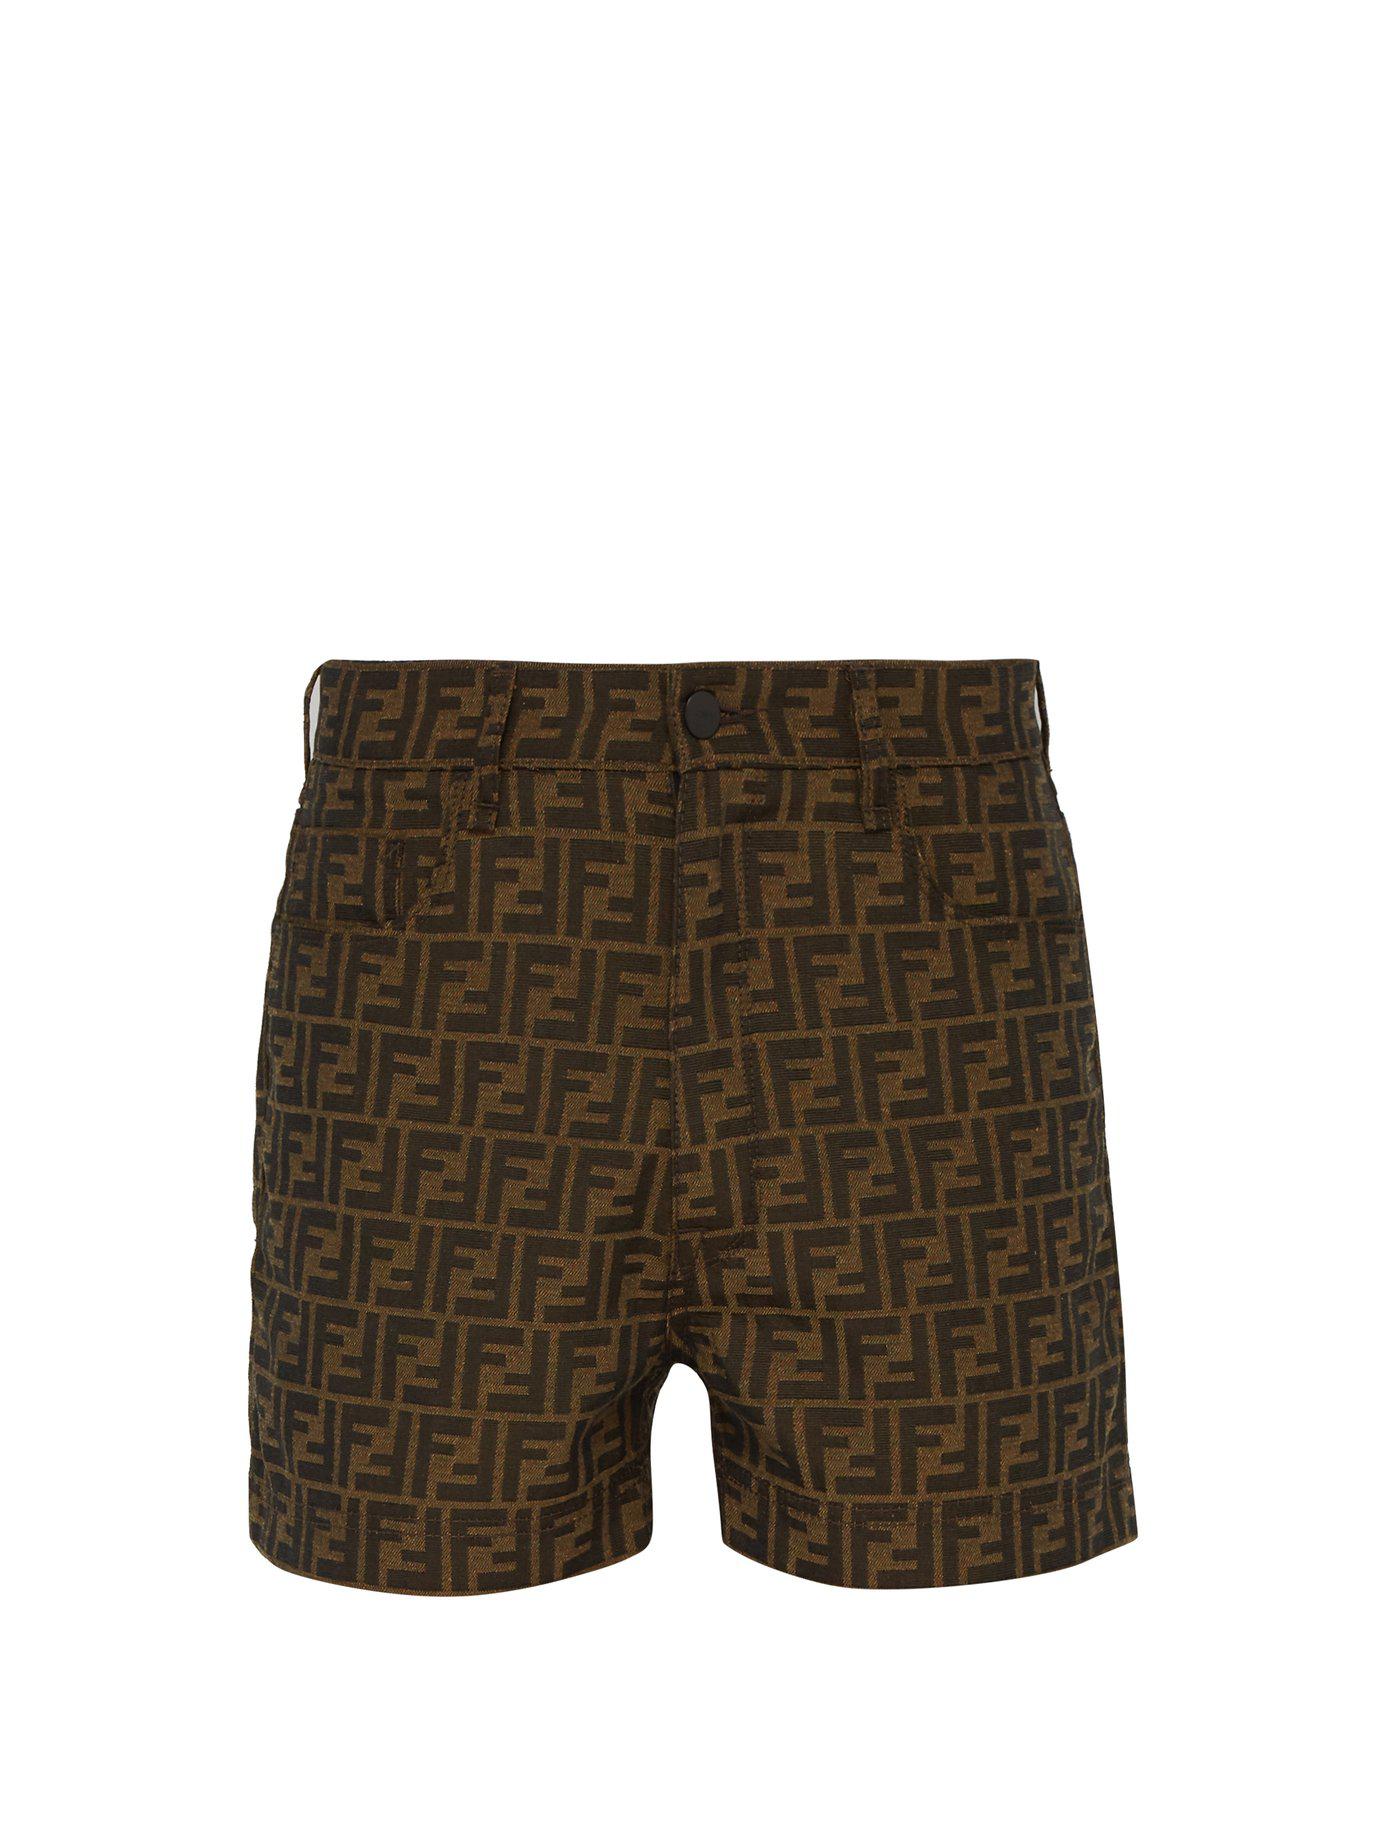 Fendi Rubber Ff Jacquard Shorts for Men | Lyst